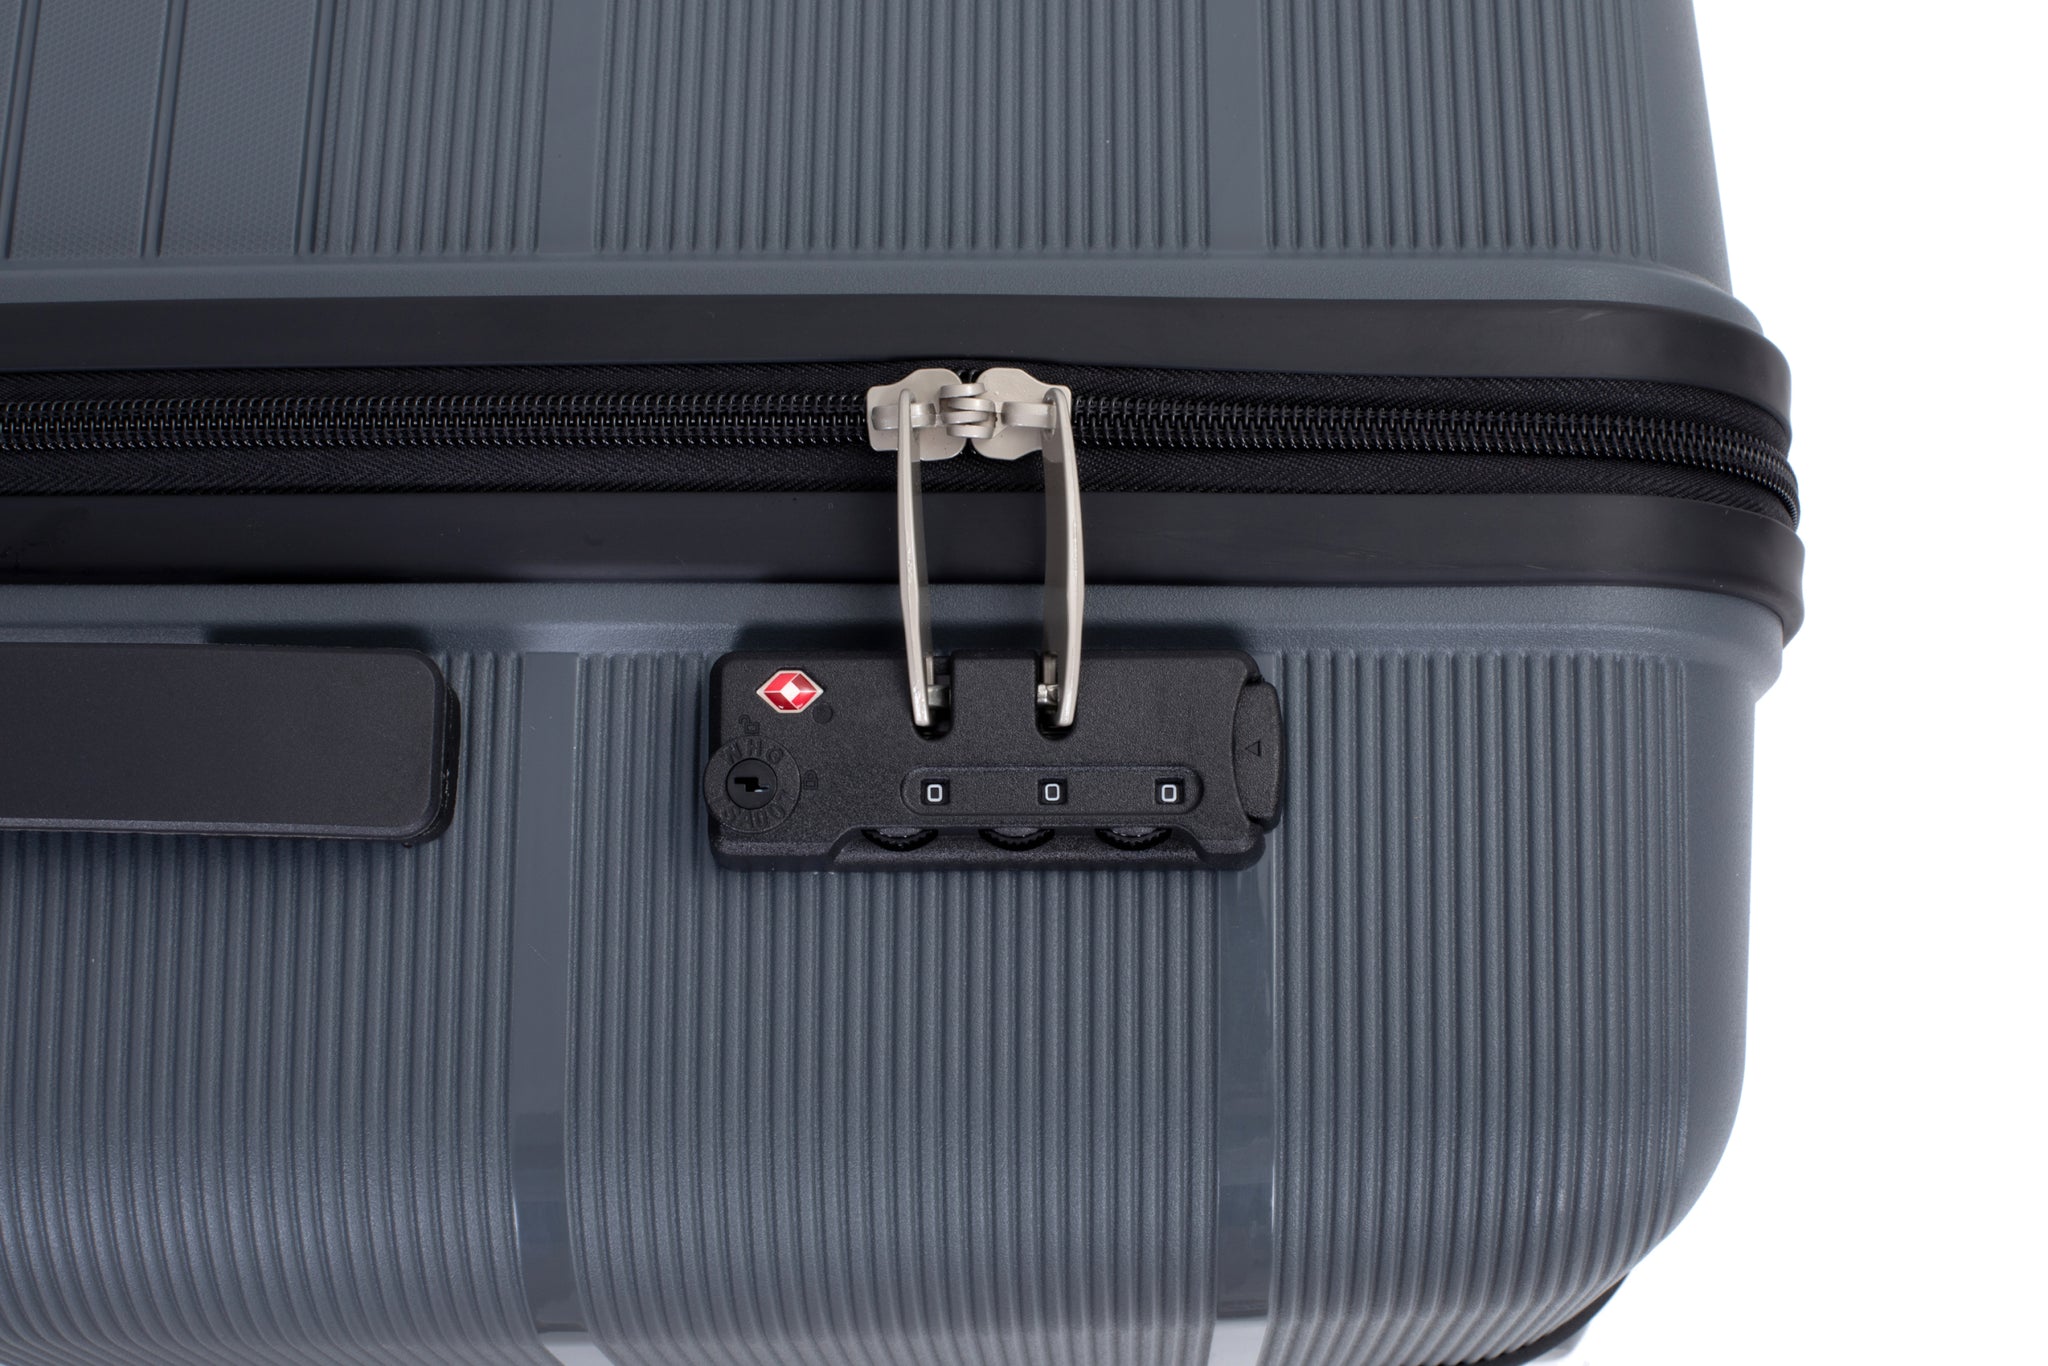 Hardshell Suitcase Double Spinner Wheels PP Luggage gray-polypropylene